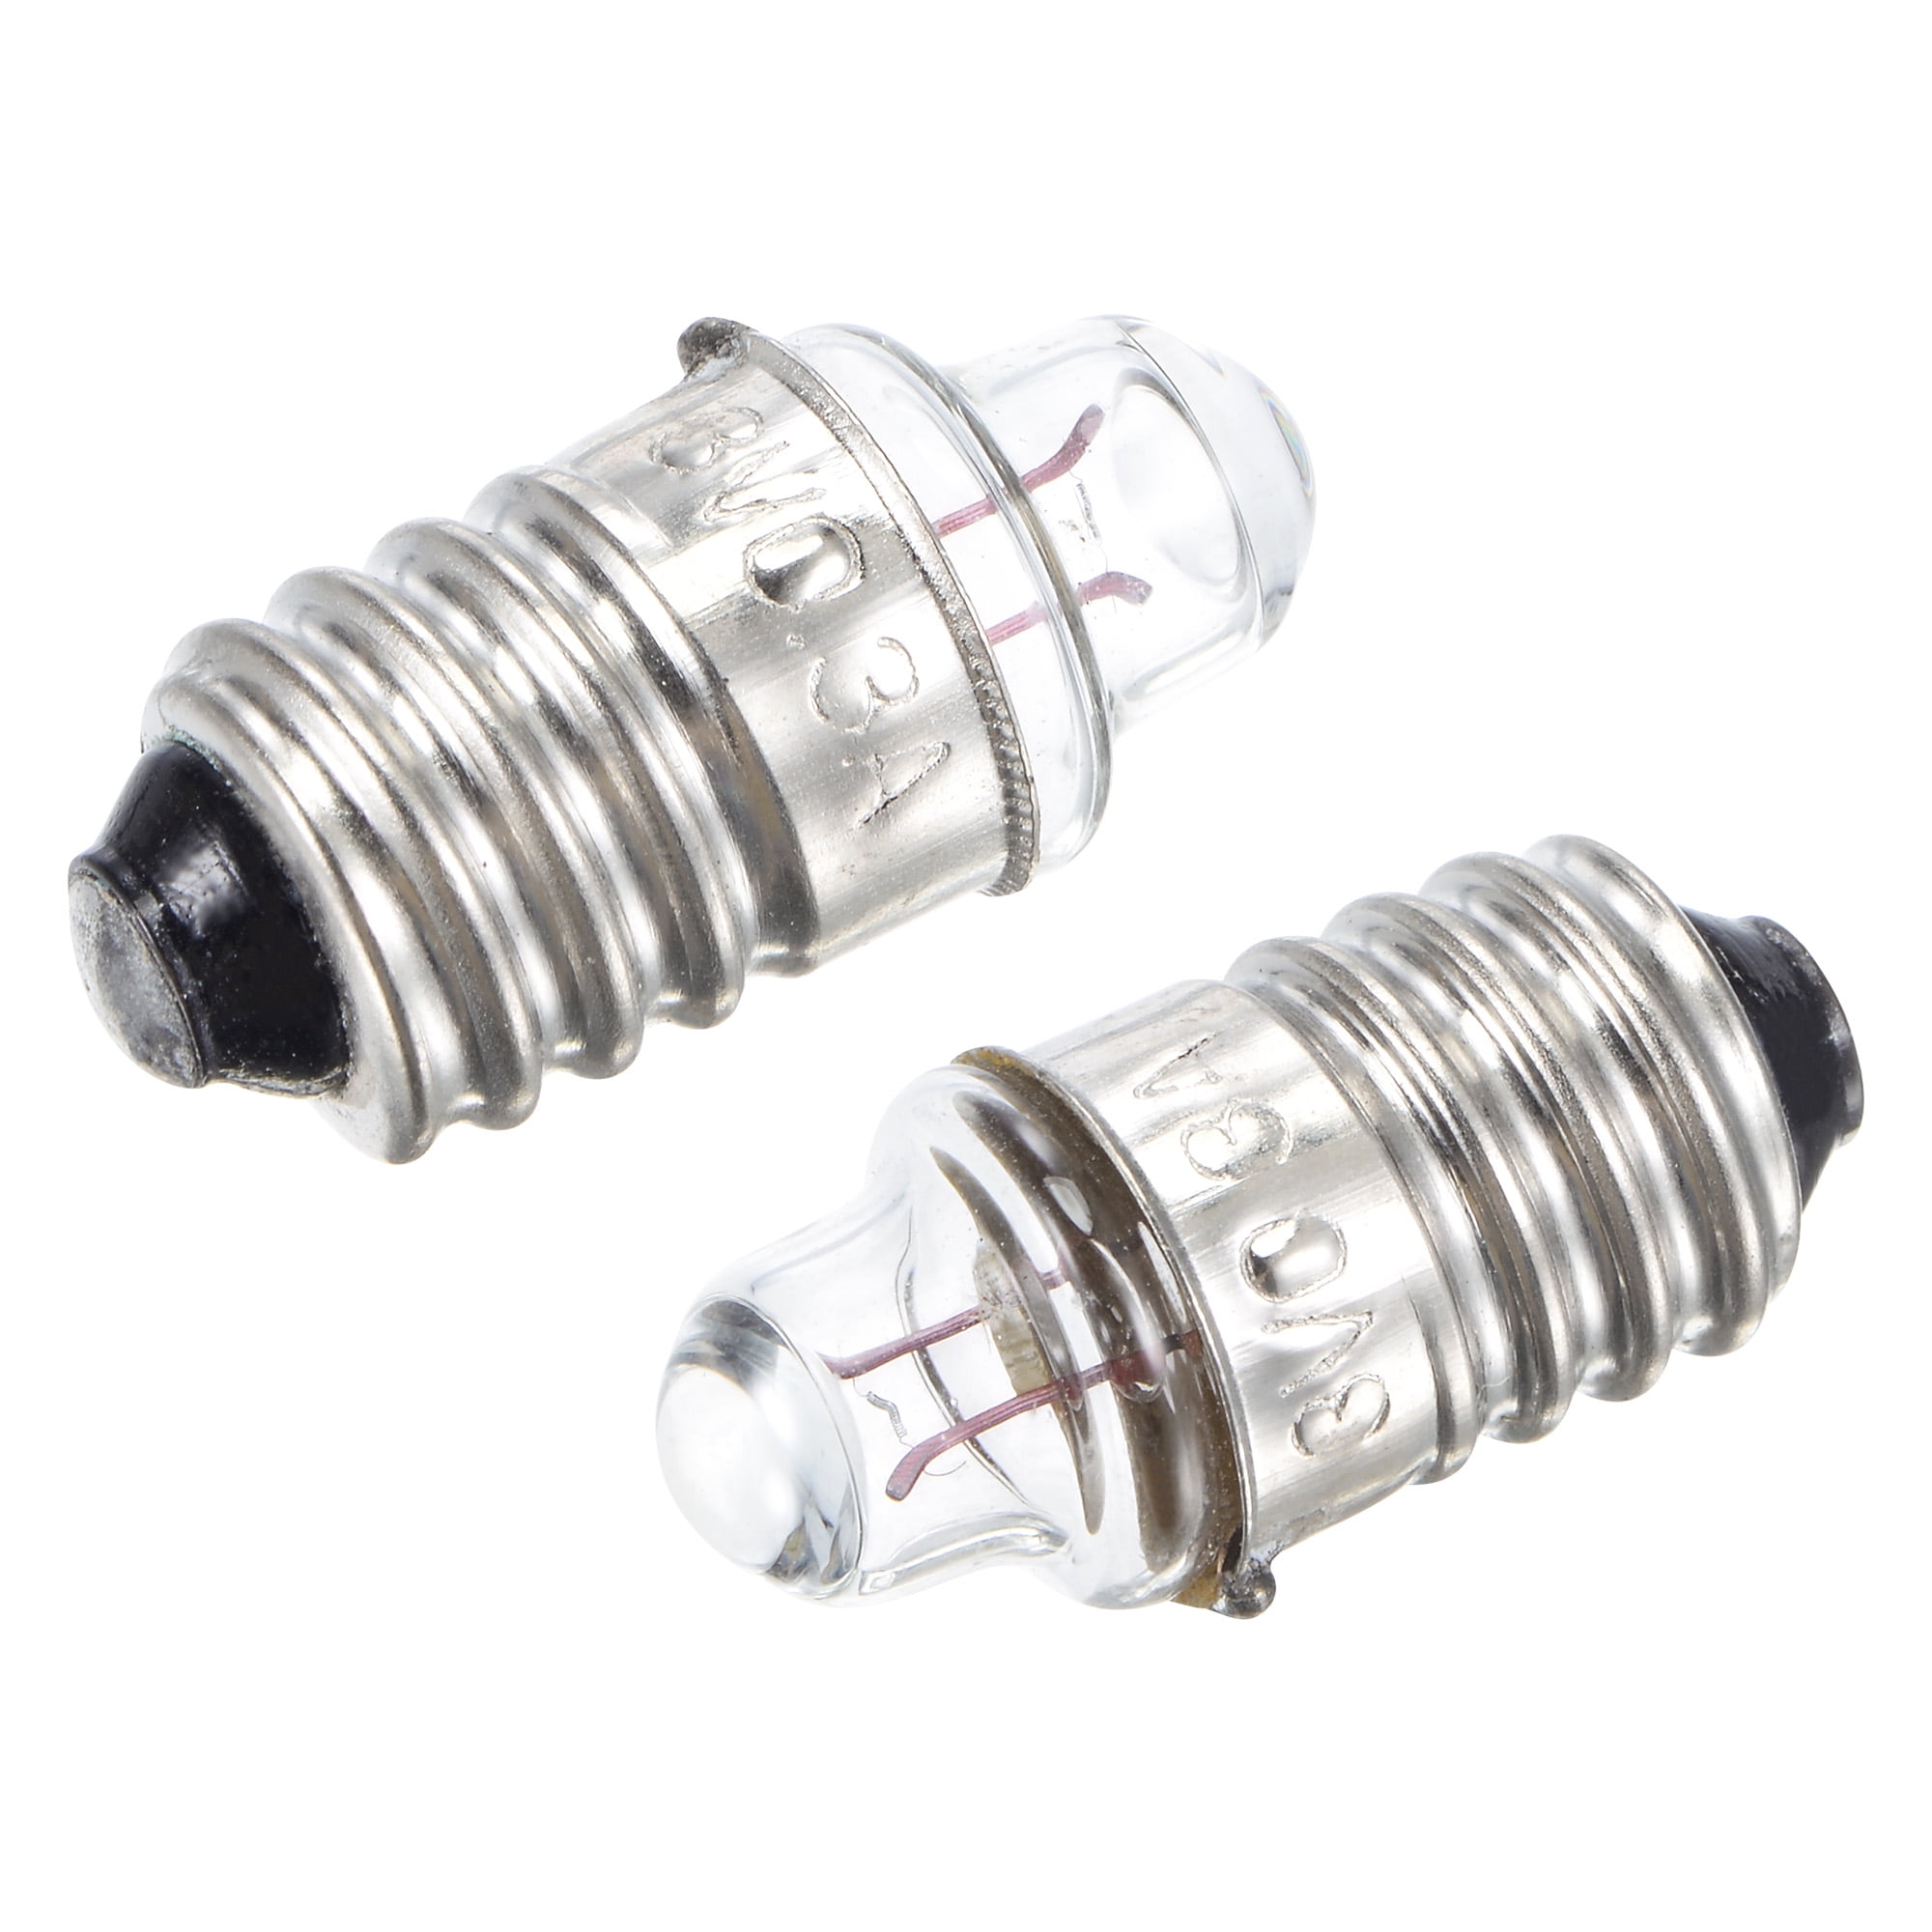 1.5V Pack of 10 E10 Miniature Screw Base Light Bulbs 0.3A 